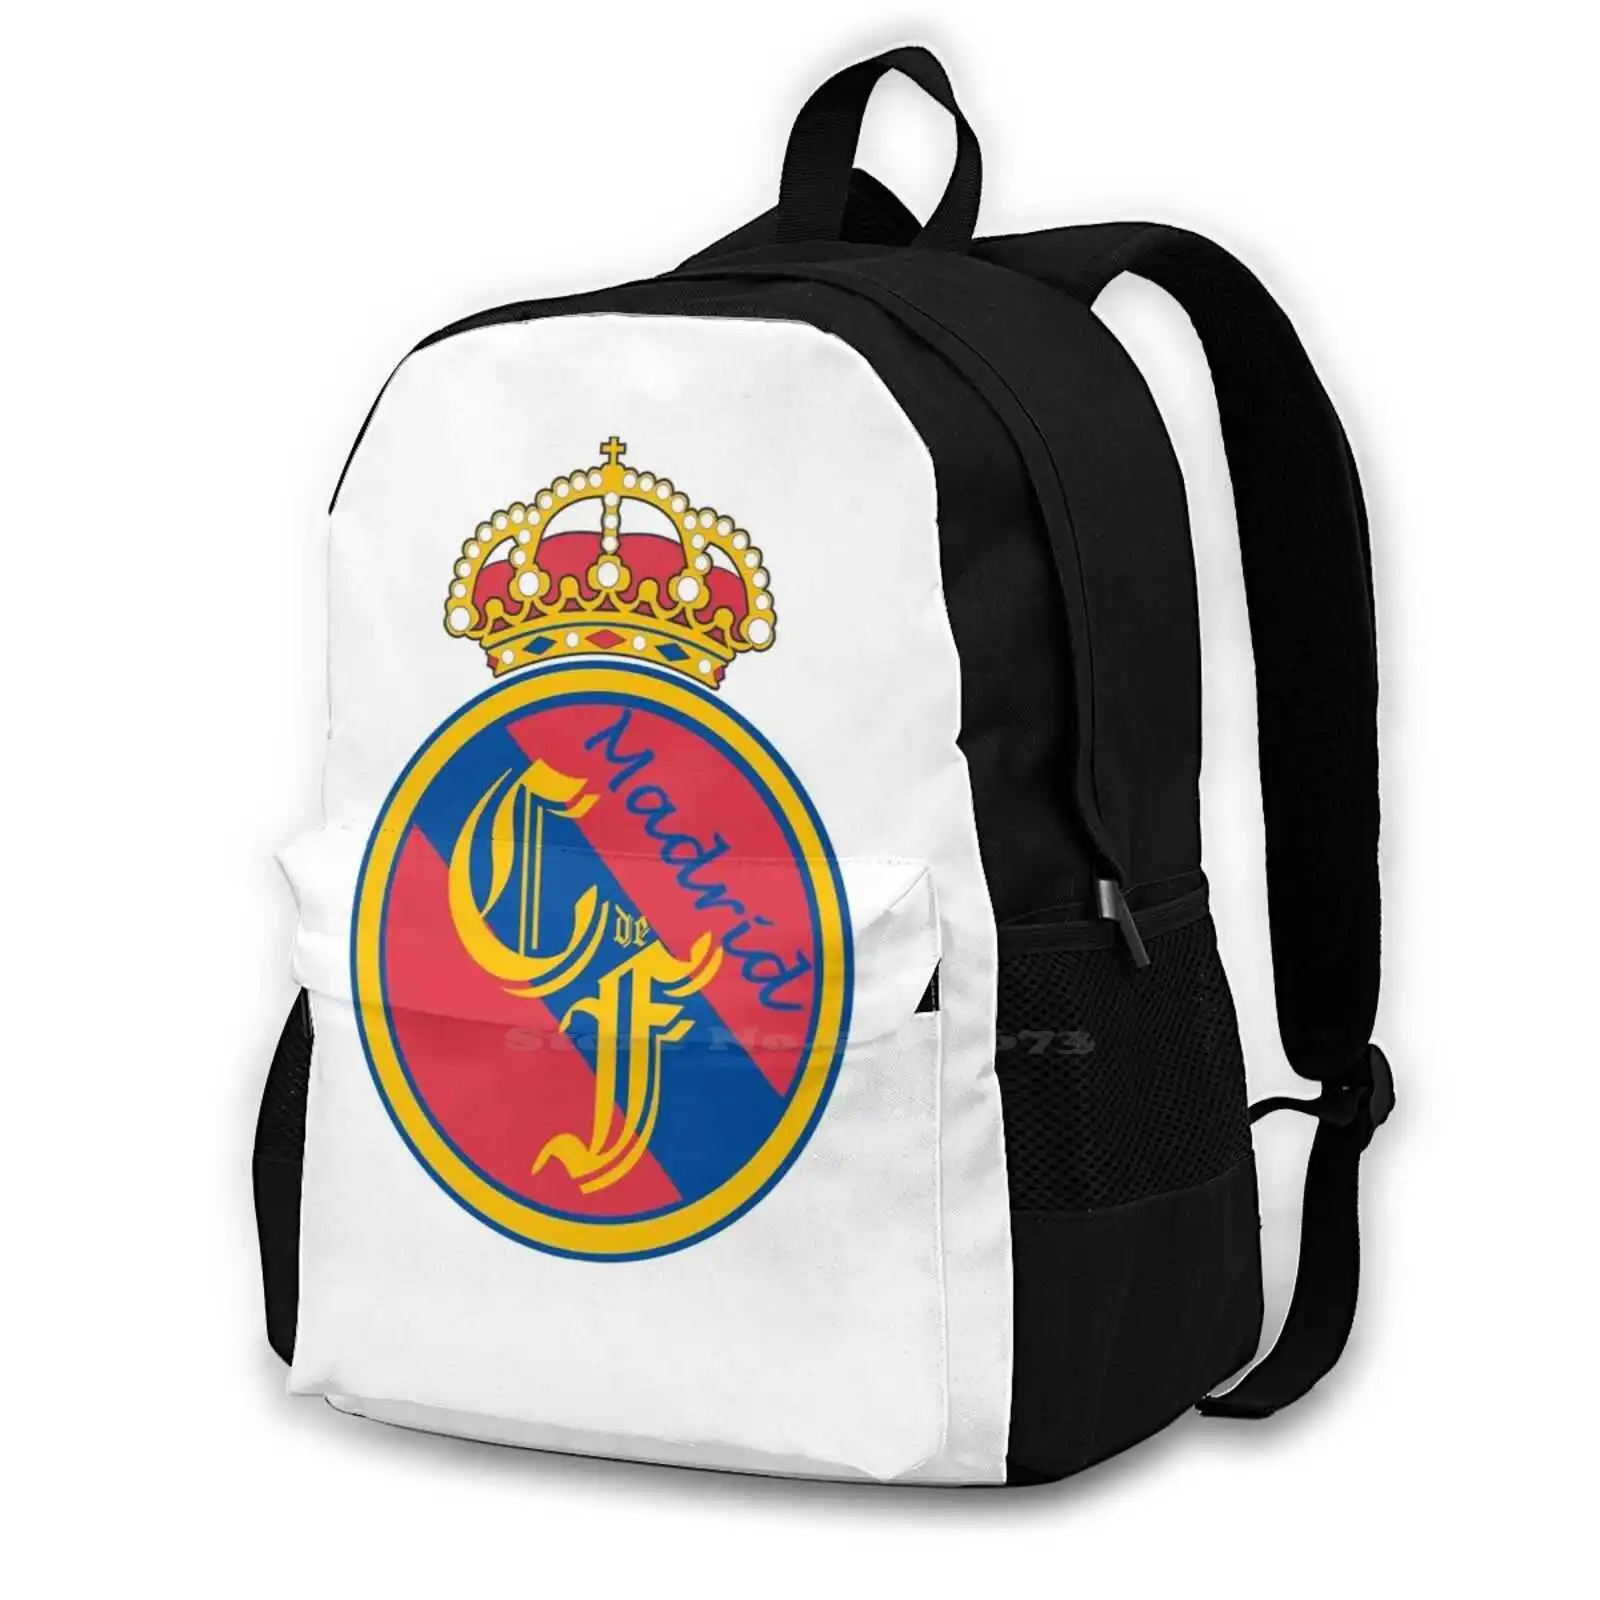 

Club De Futbol - Madrid Women Men Teens Laptop Travel School Bags Futbol Soccer Club Team Squad Goalie Madrid Spain Getafe